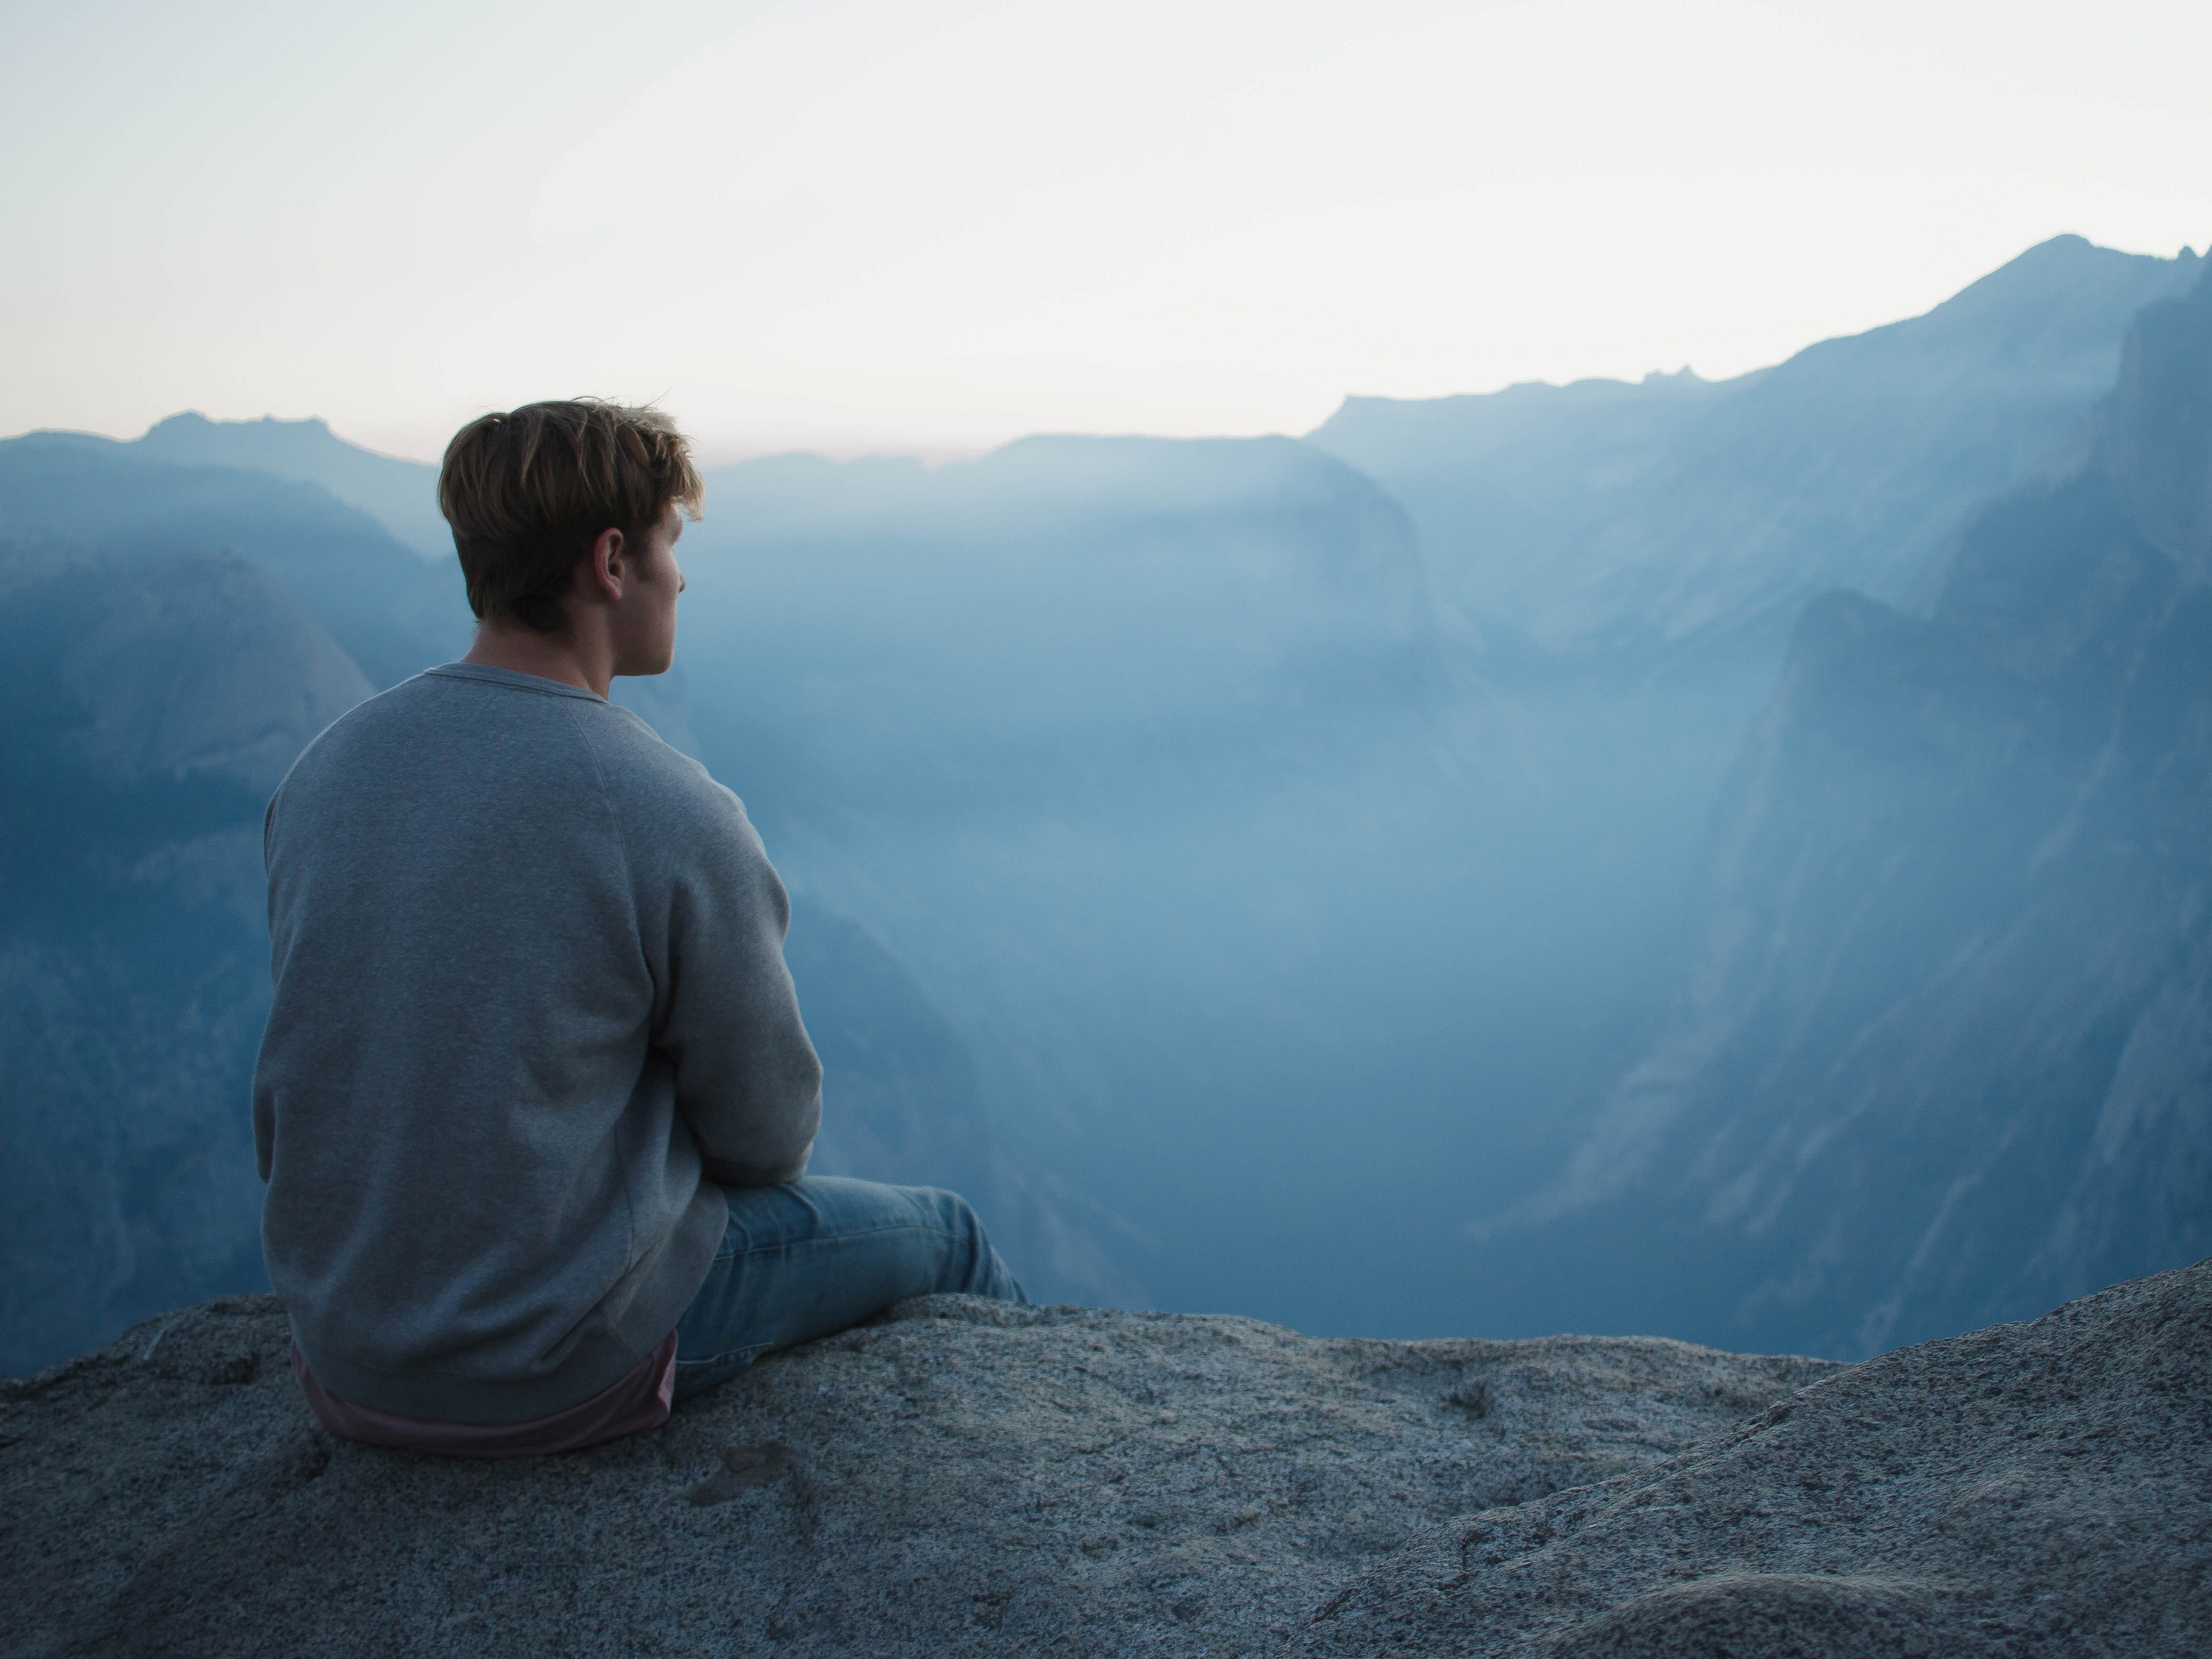 Man sitting on a mountainside